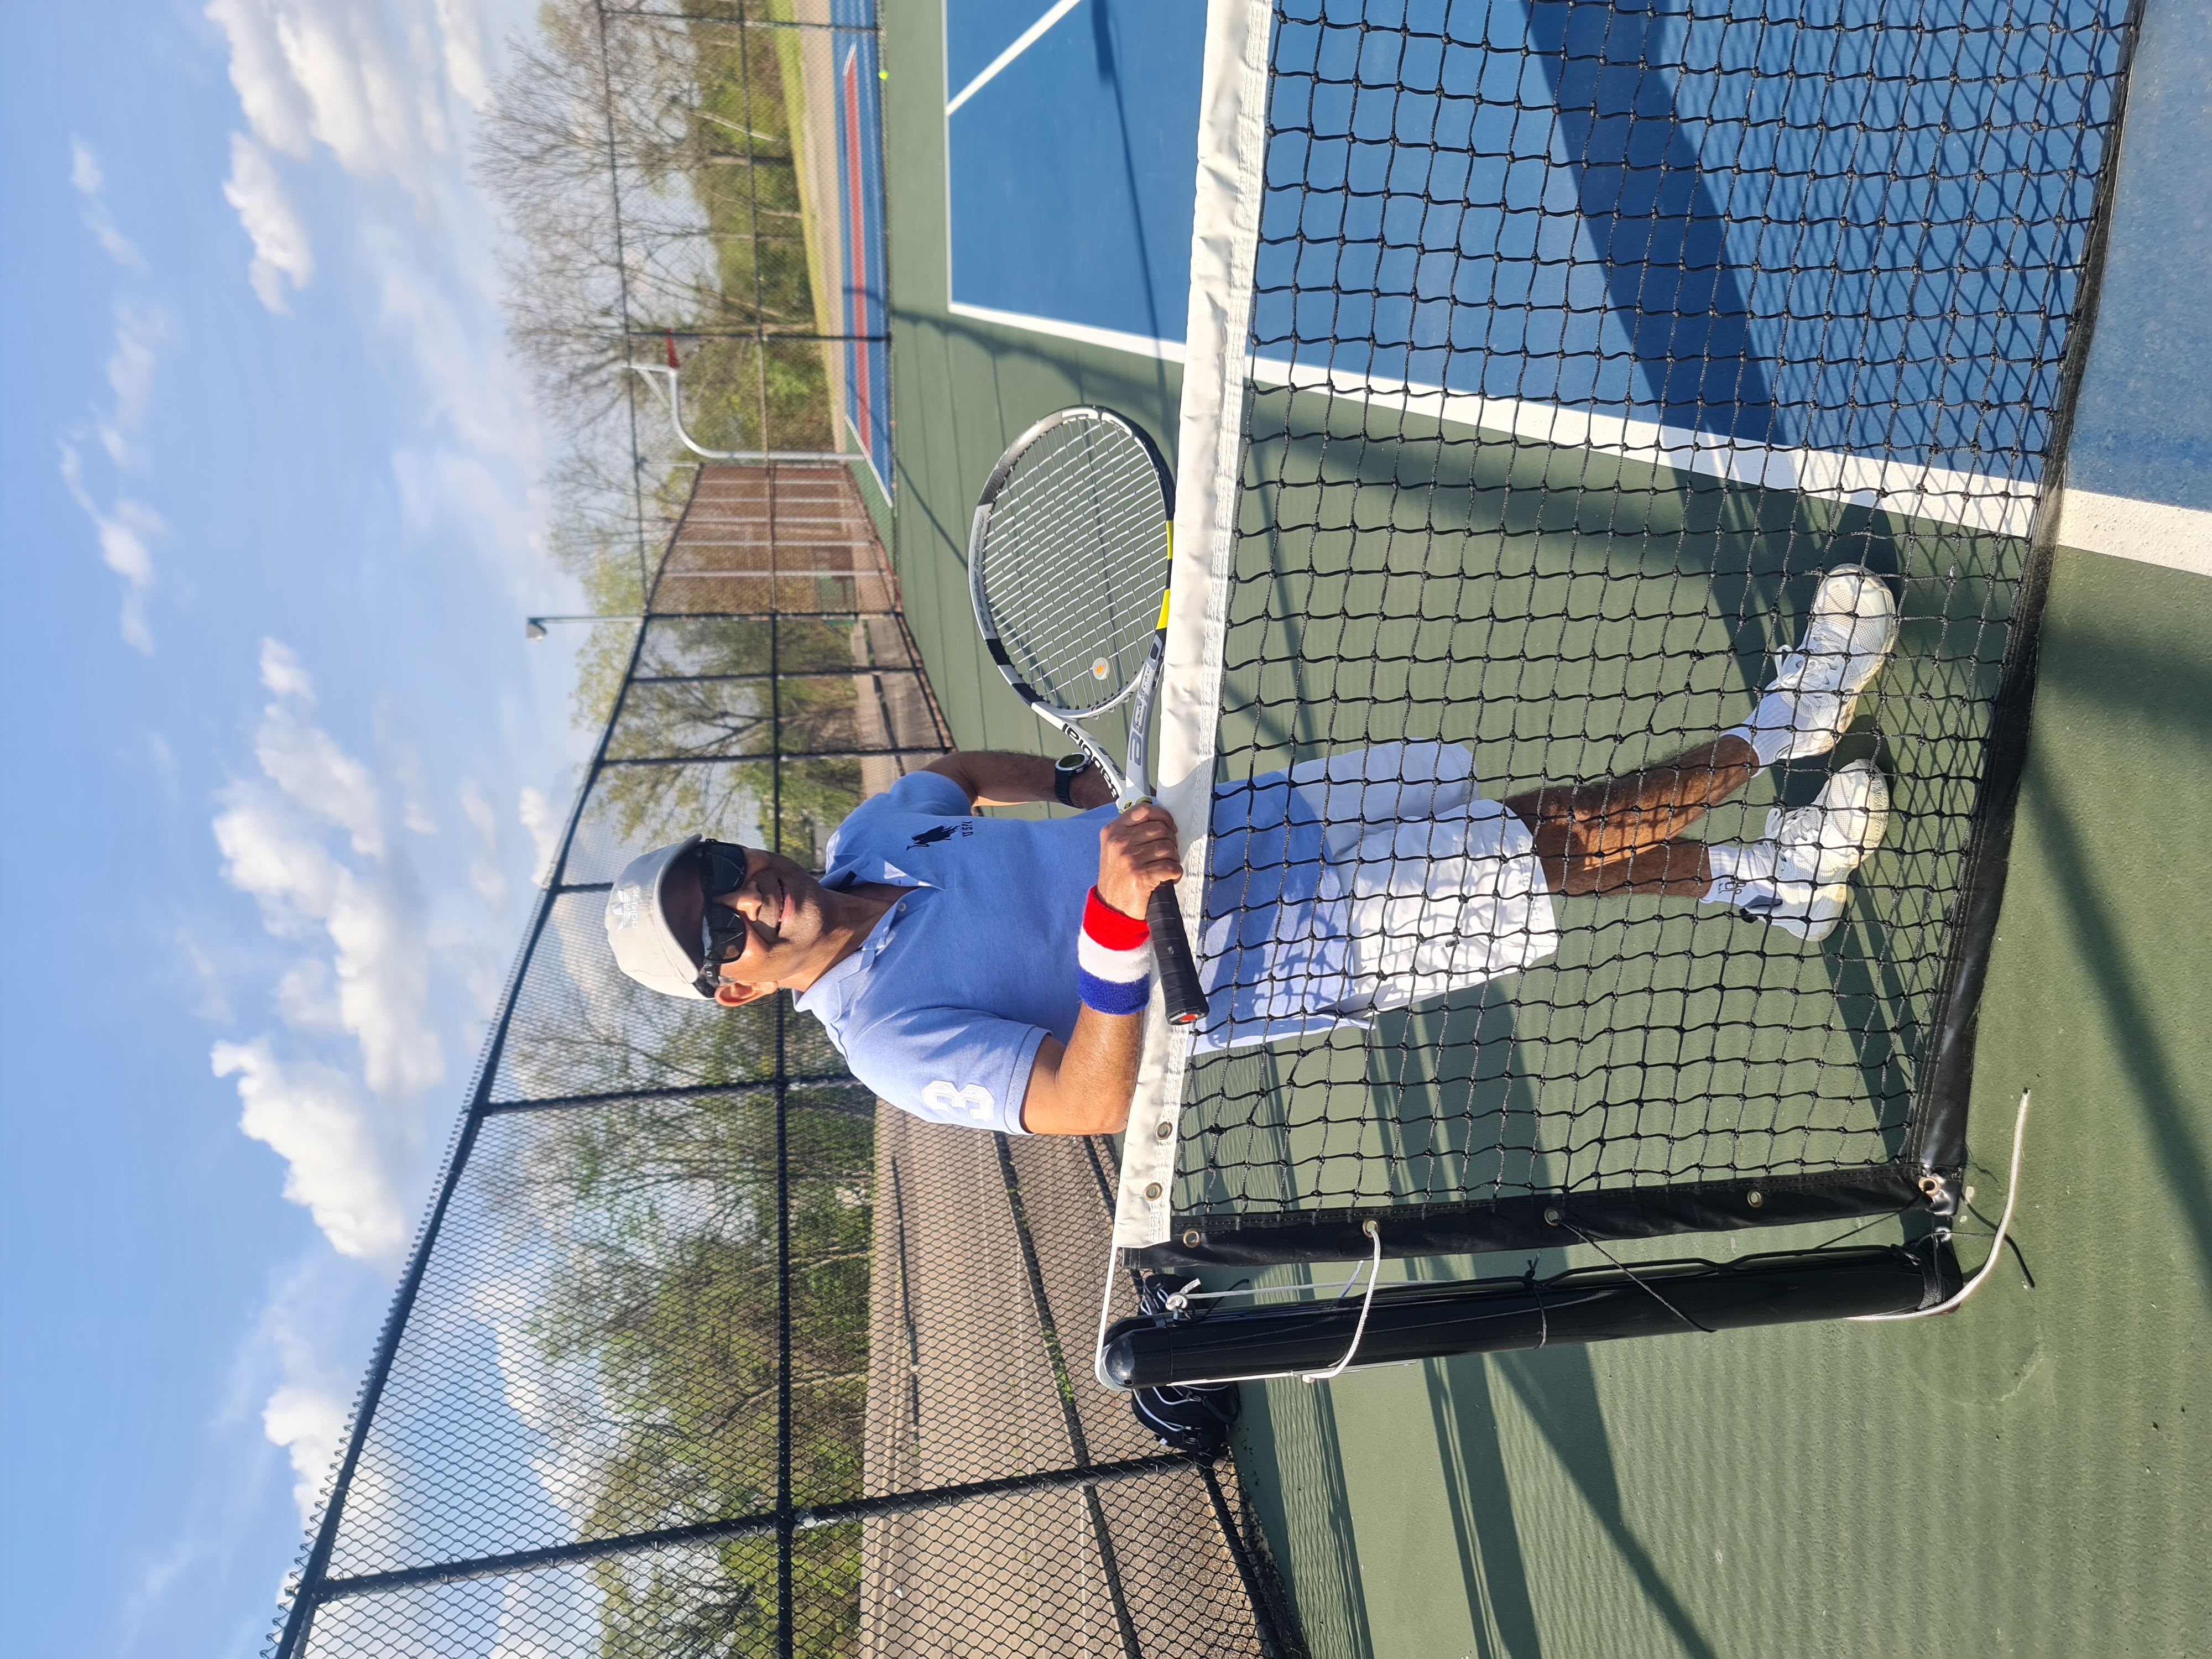 Jacob K. teaches tennis lessons in Mc Kees Rocks, PA